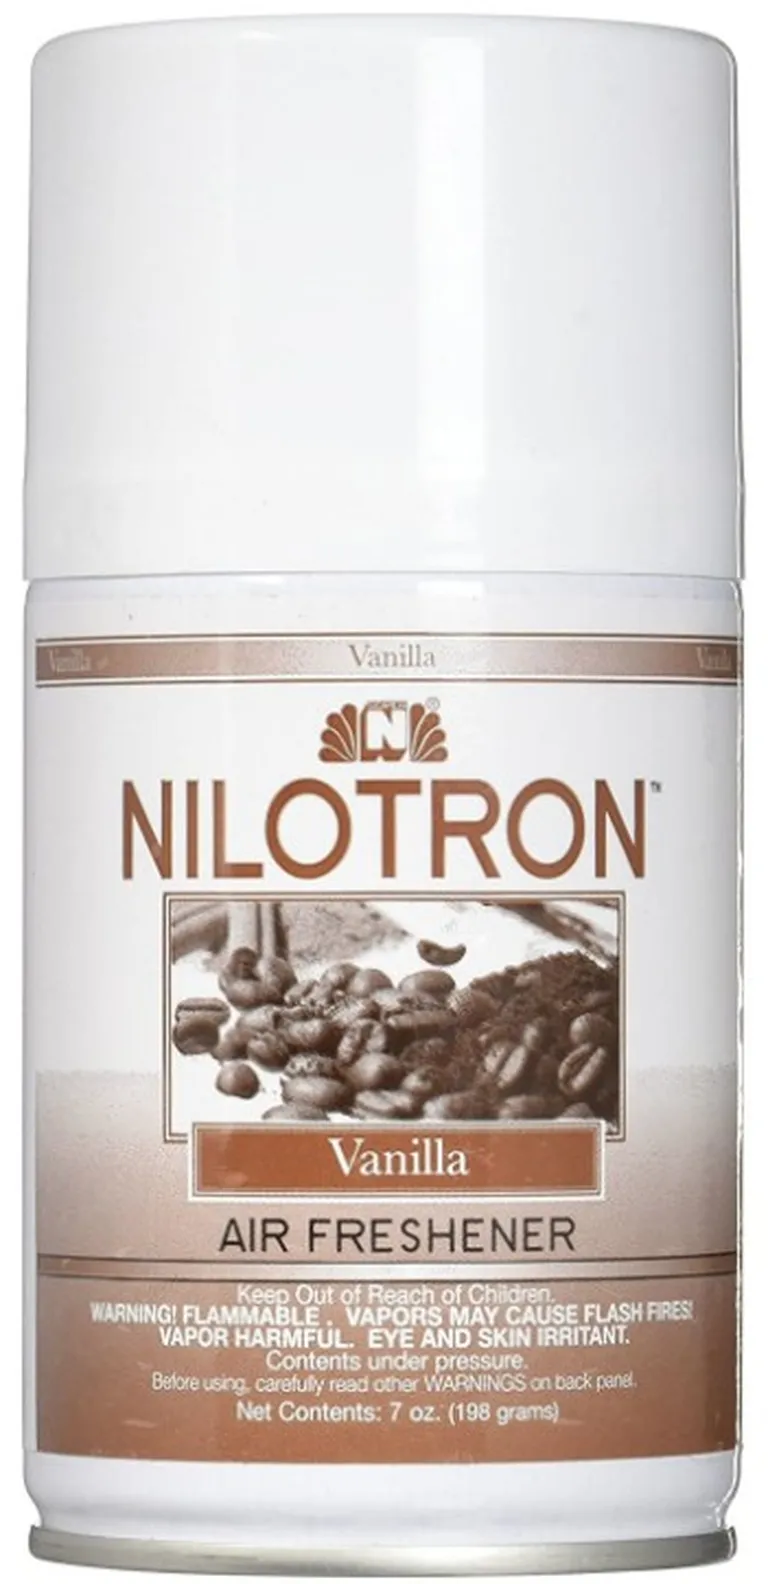 Nilodor Nilotron Deodorizing Air Freshener Vanilla Scent Photo 1